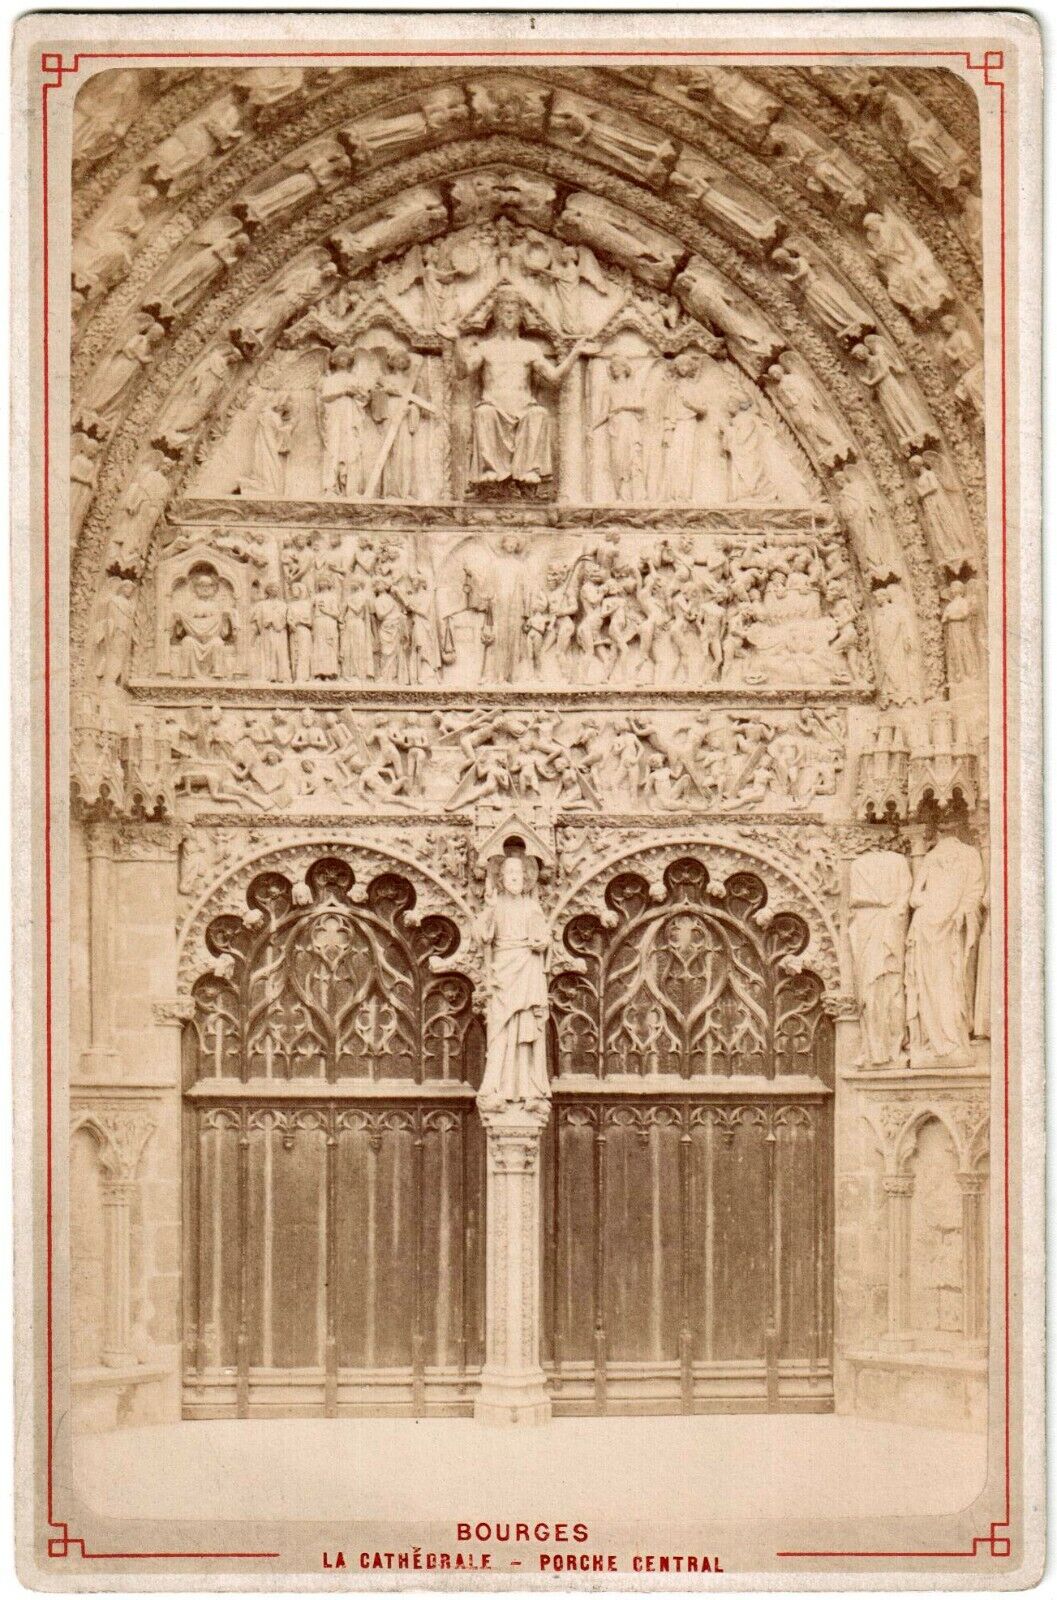 Bourges.La Cathédrale.Porche Central.France.Cabinet Card Card.Albuminated Photo.